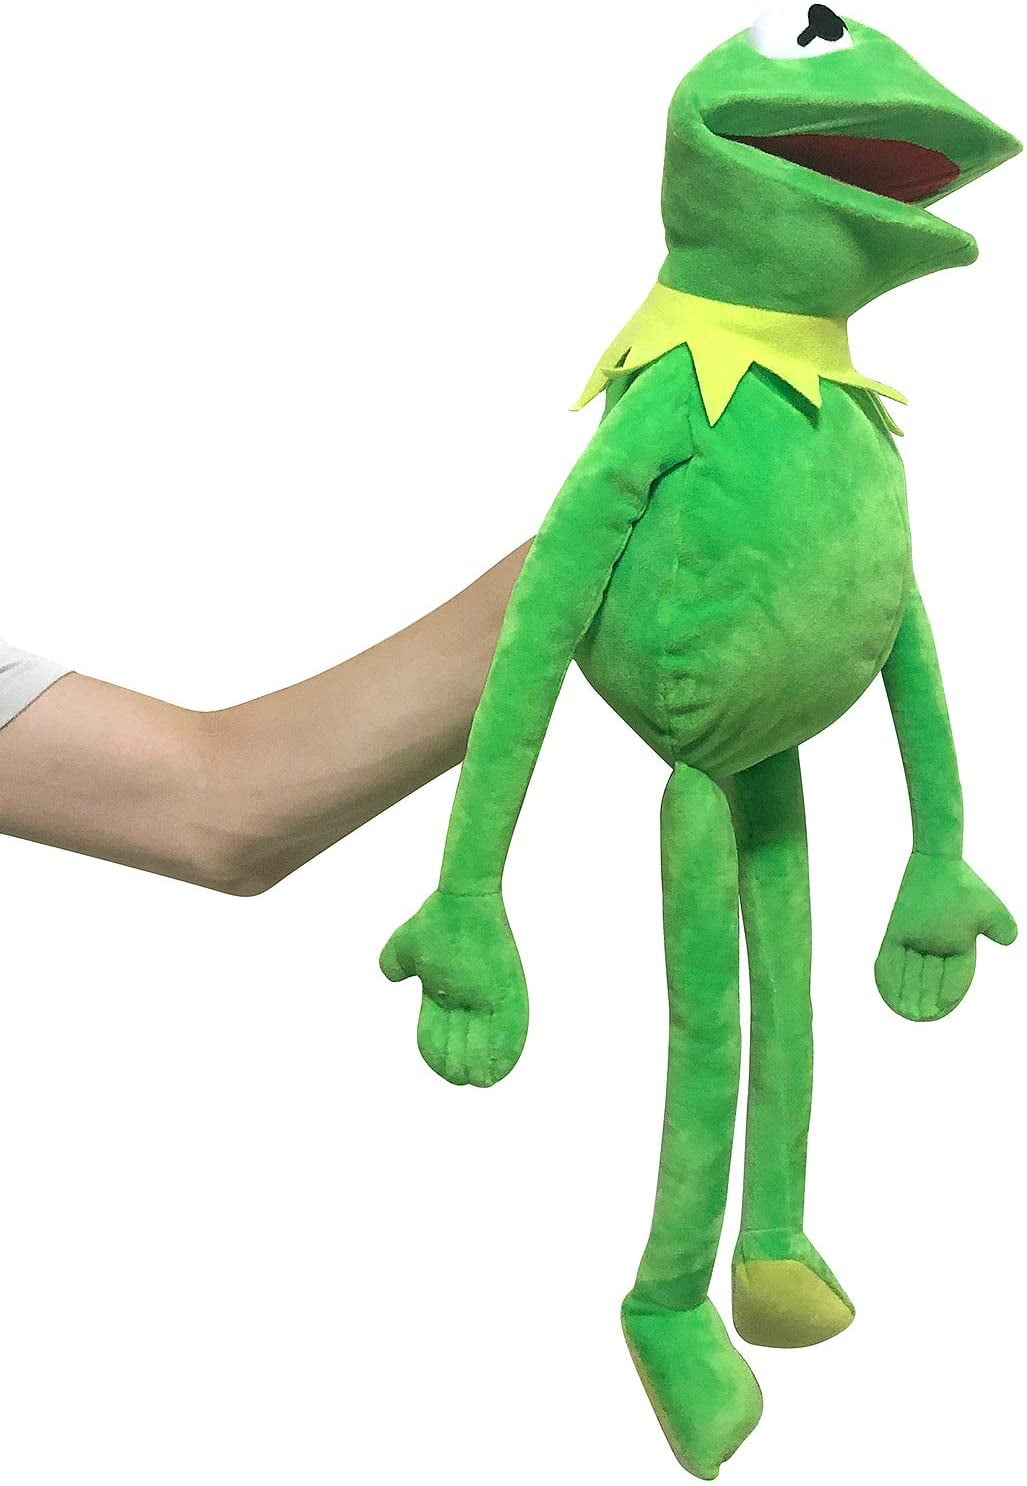 Snuggle Toy 10" Sitting Pond Frog Soft Stuffed Plush Full Body Hand Puppet 